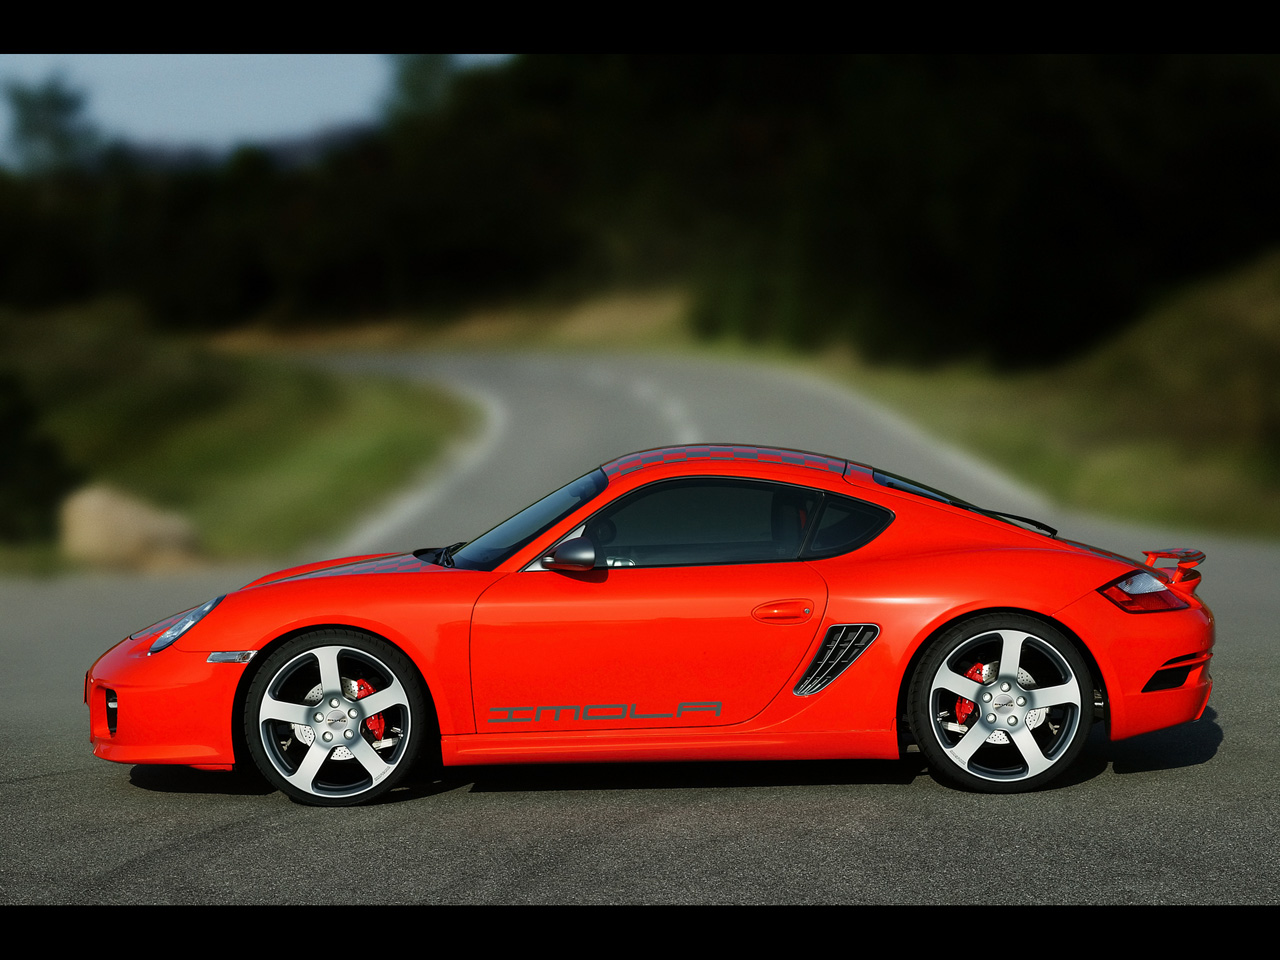 2007 Rinspeed Imola based on Porsche Cayman